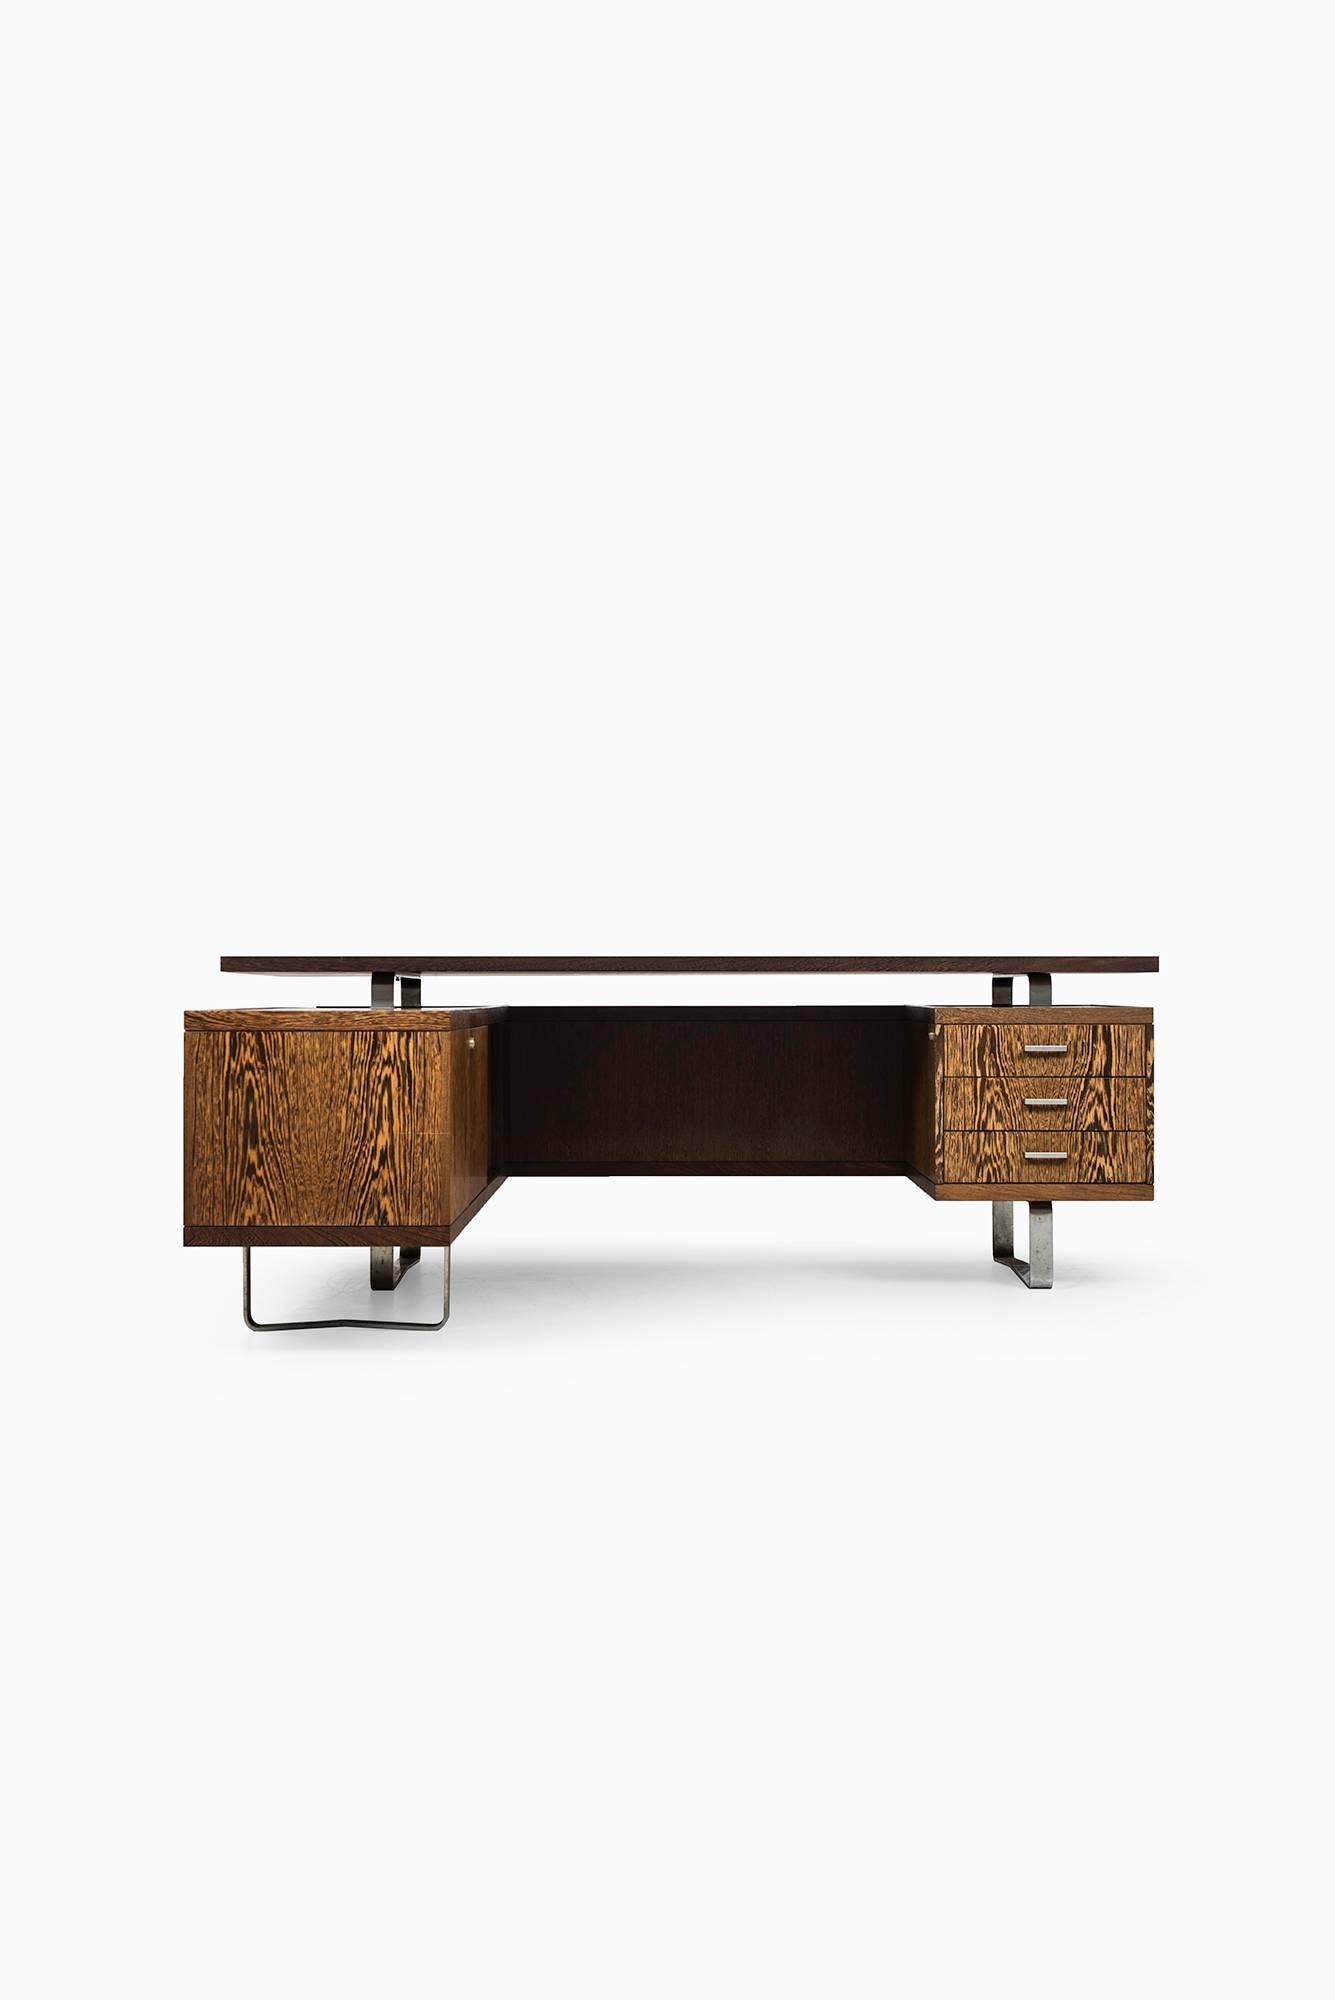 Rare freestanding desk designed by Jorgen Pedersen. Produced by E. Pedersen & Søn A/S in Denmark.